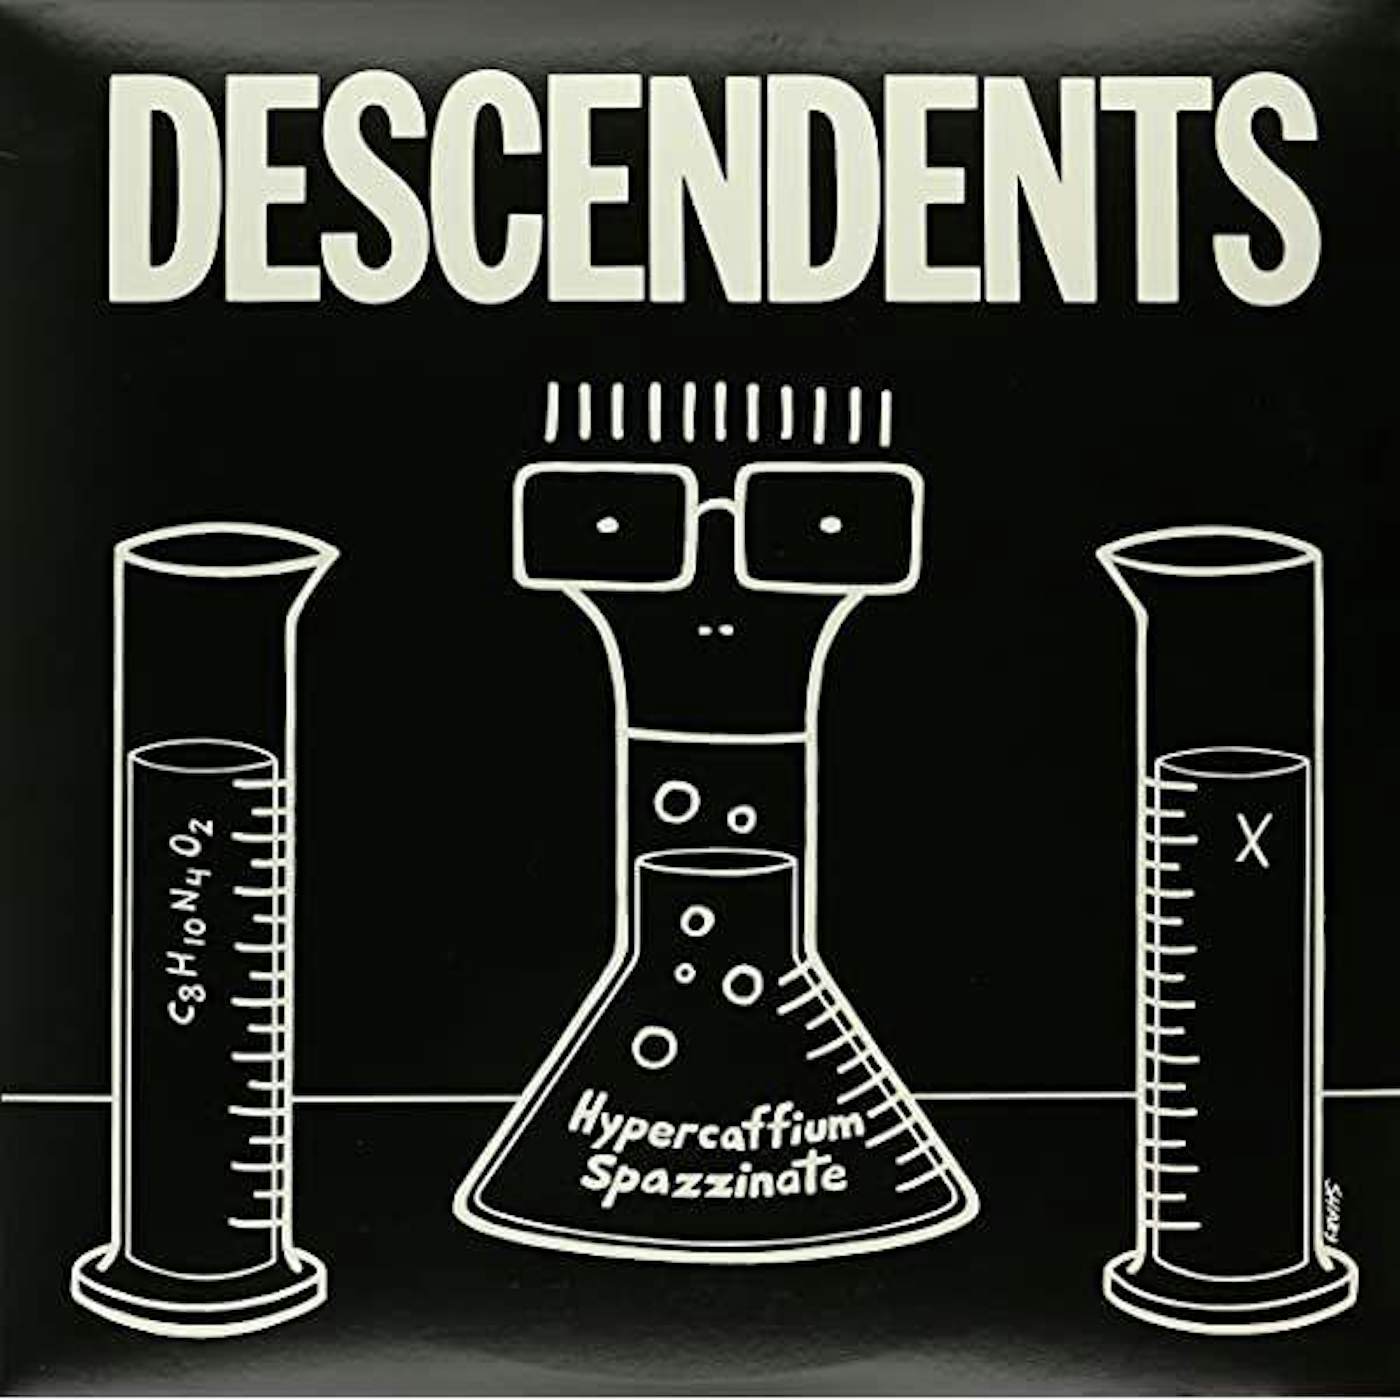 Descendents Hypercaffium Spazzinate (DL Card) vinyl record